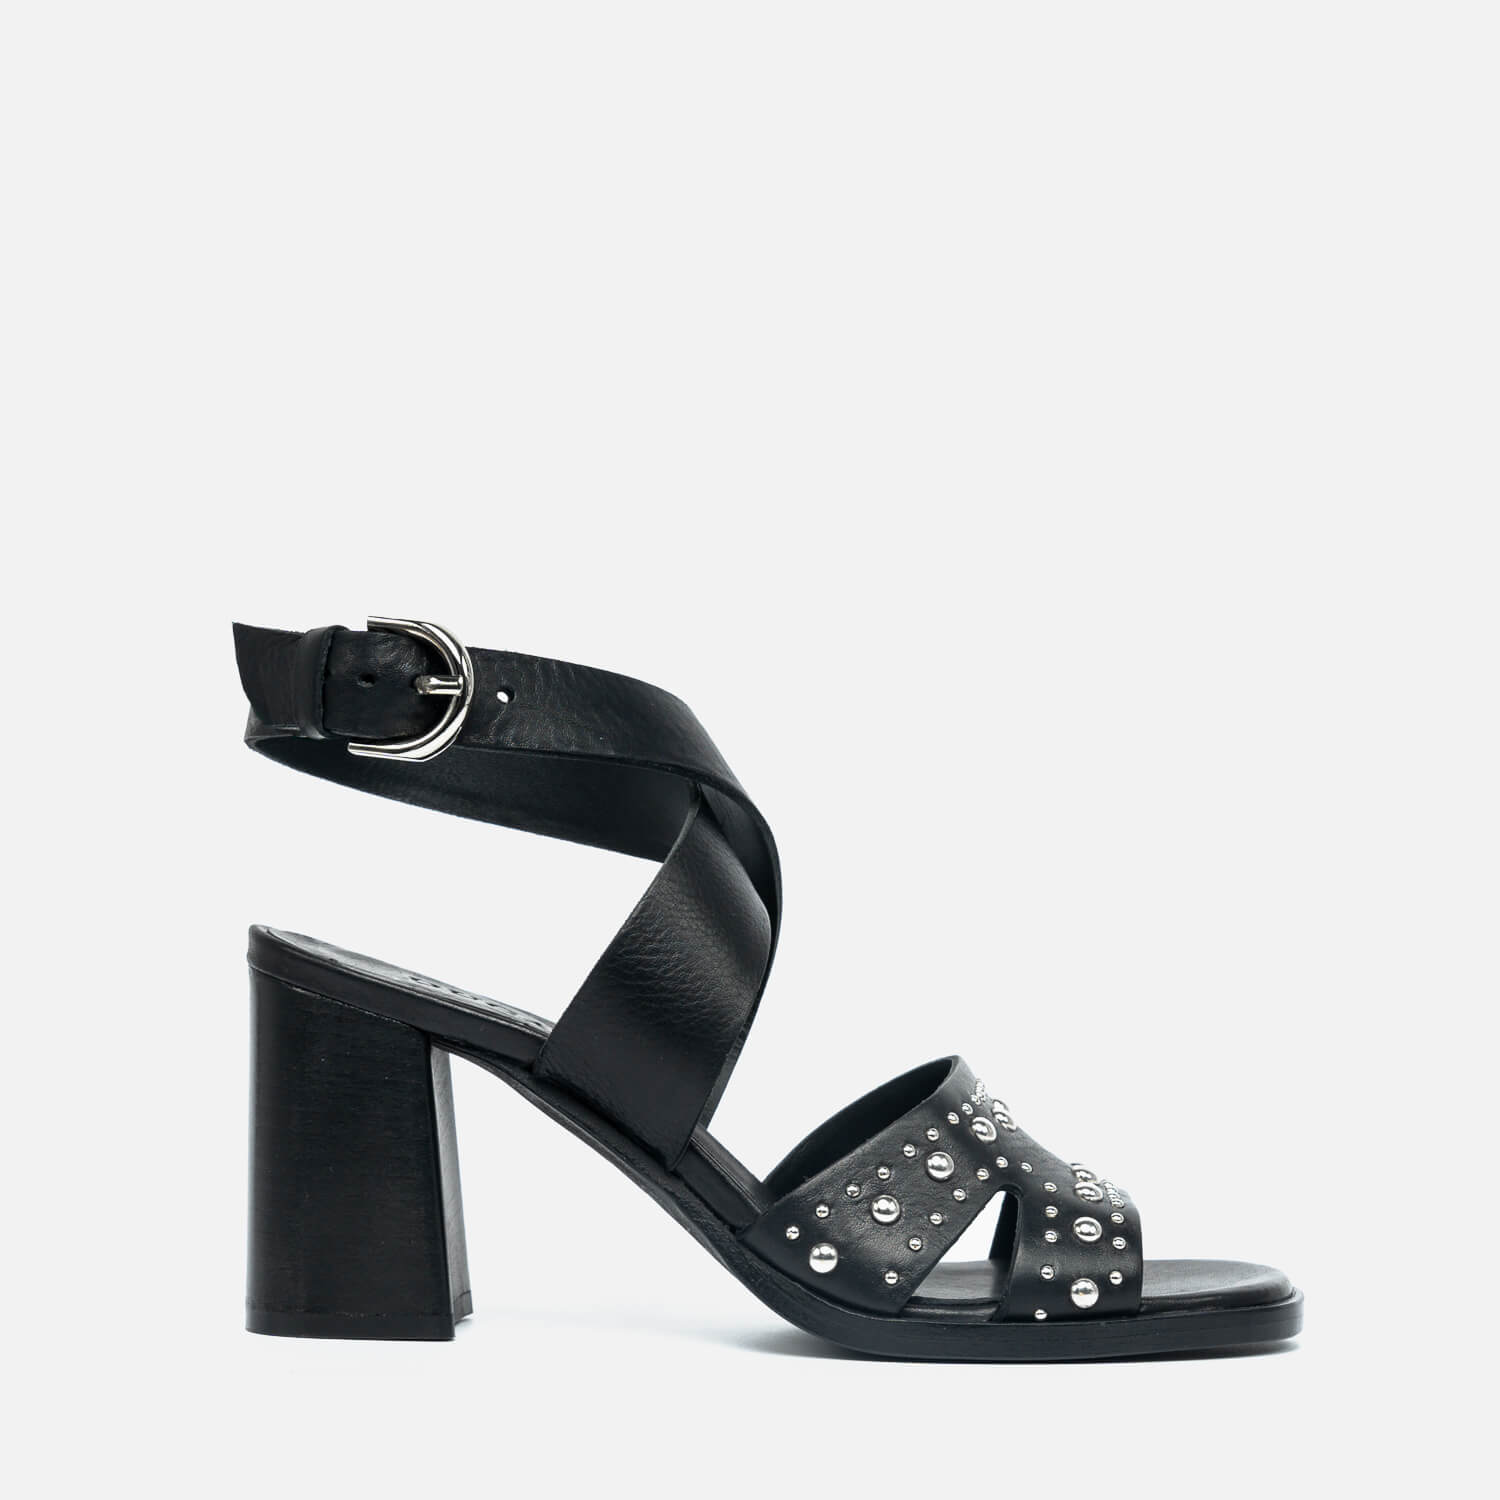 Beatrice | Model 3736 sandals black